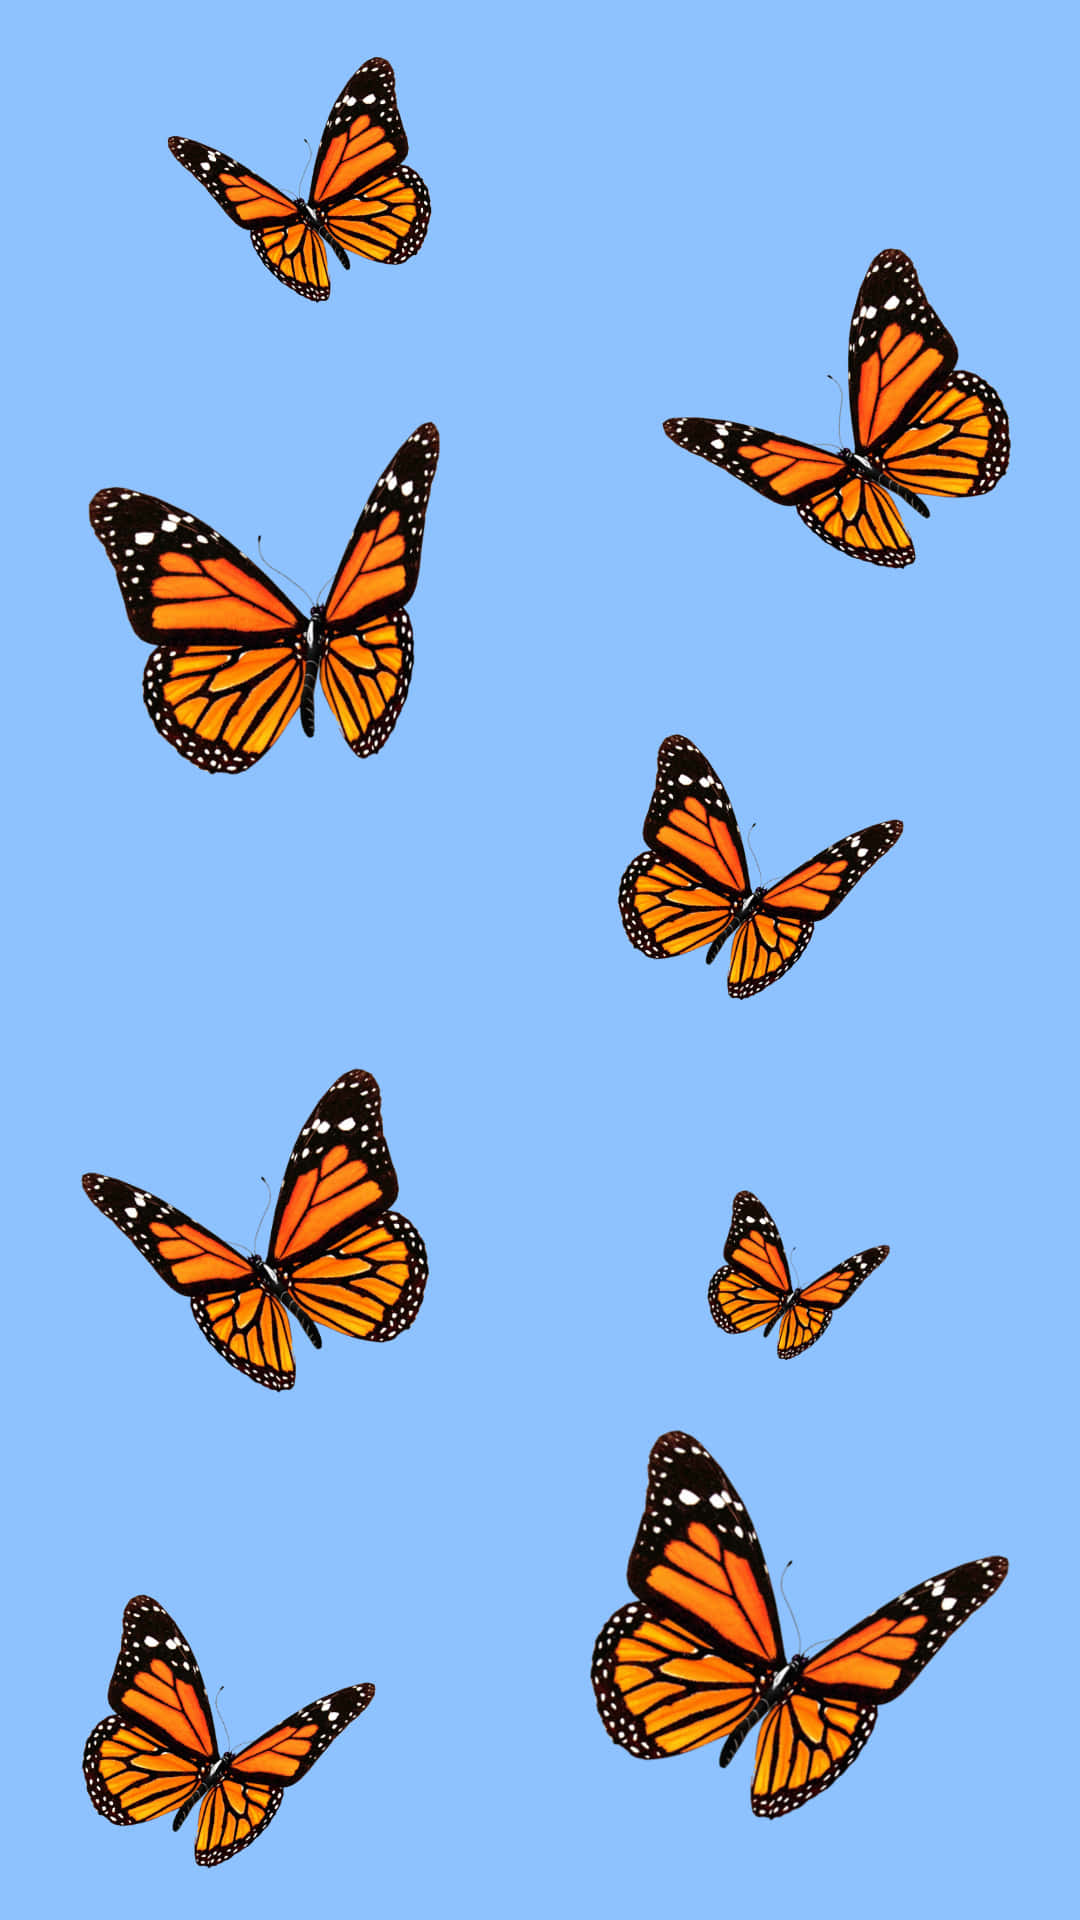 VSCO Butterfly In Blue Aesthetic Wallpaper